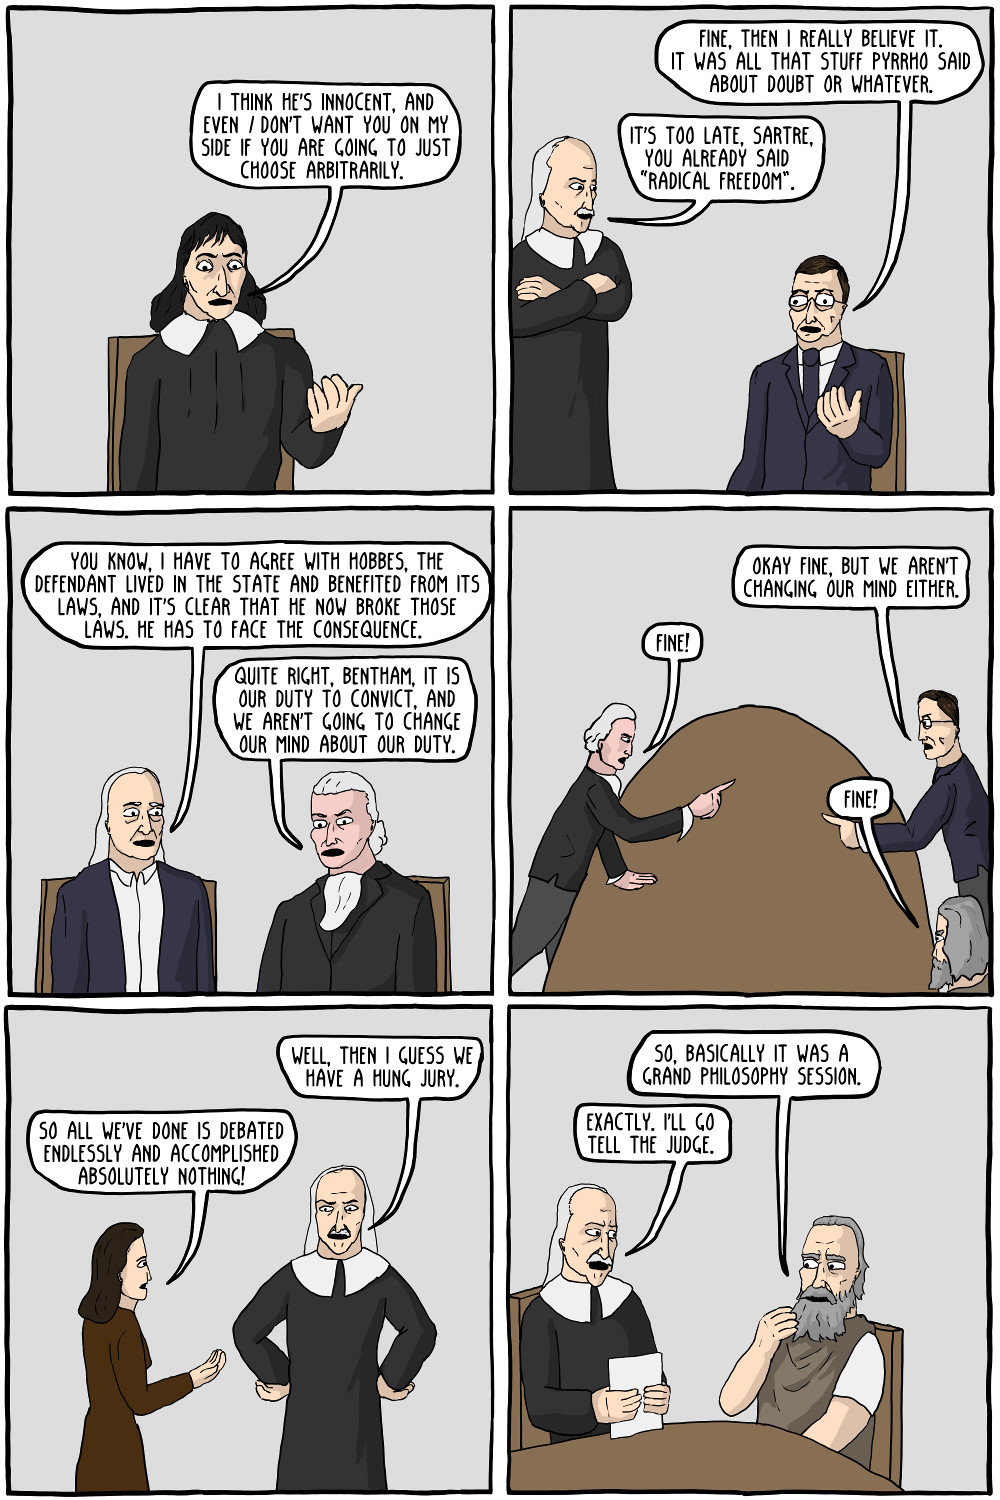 12 Angry Philosophers [Comic]